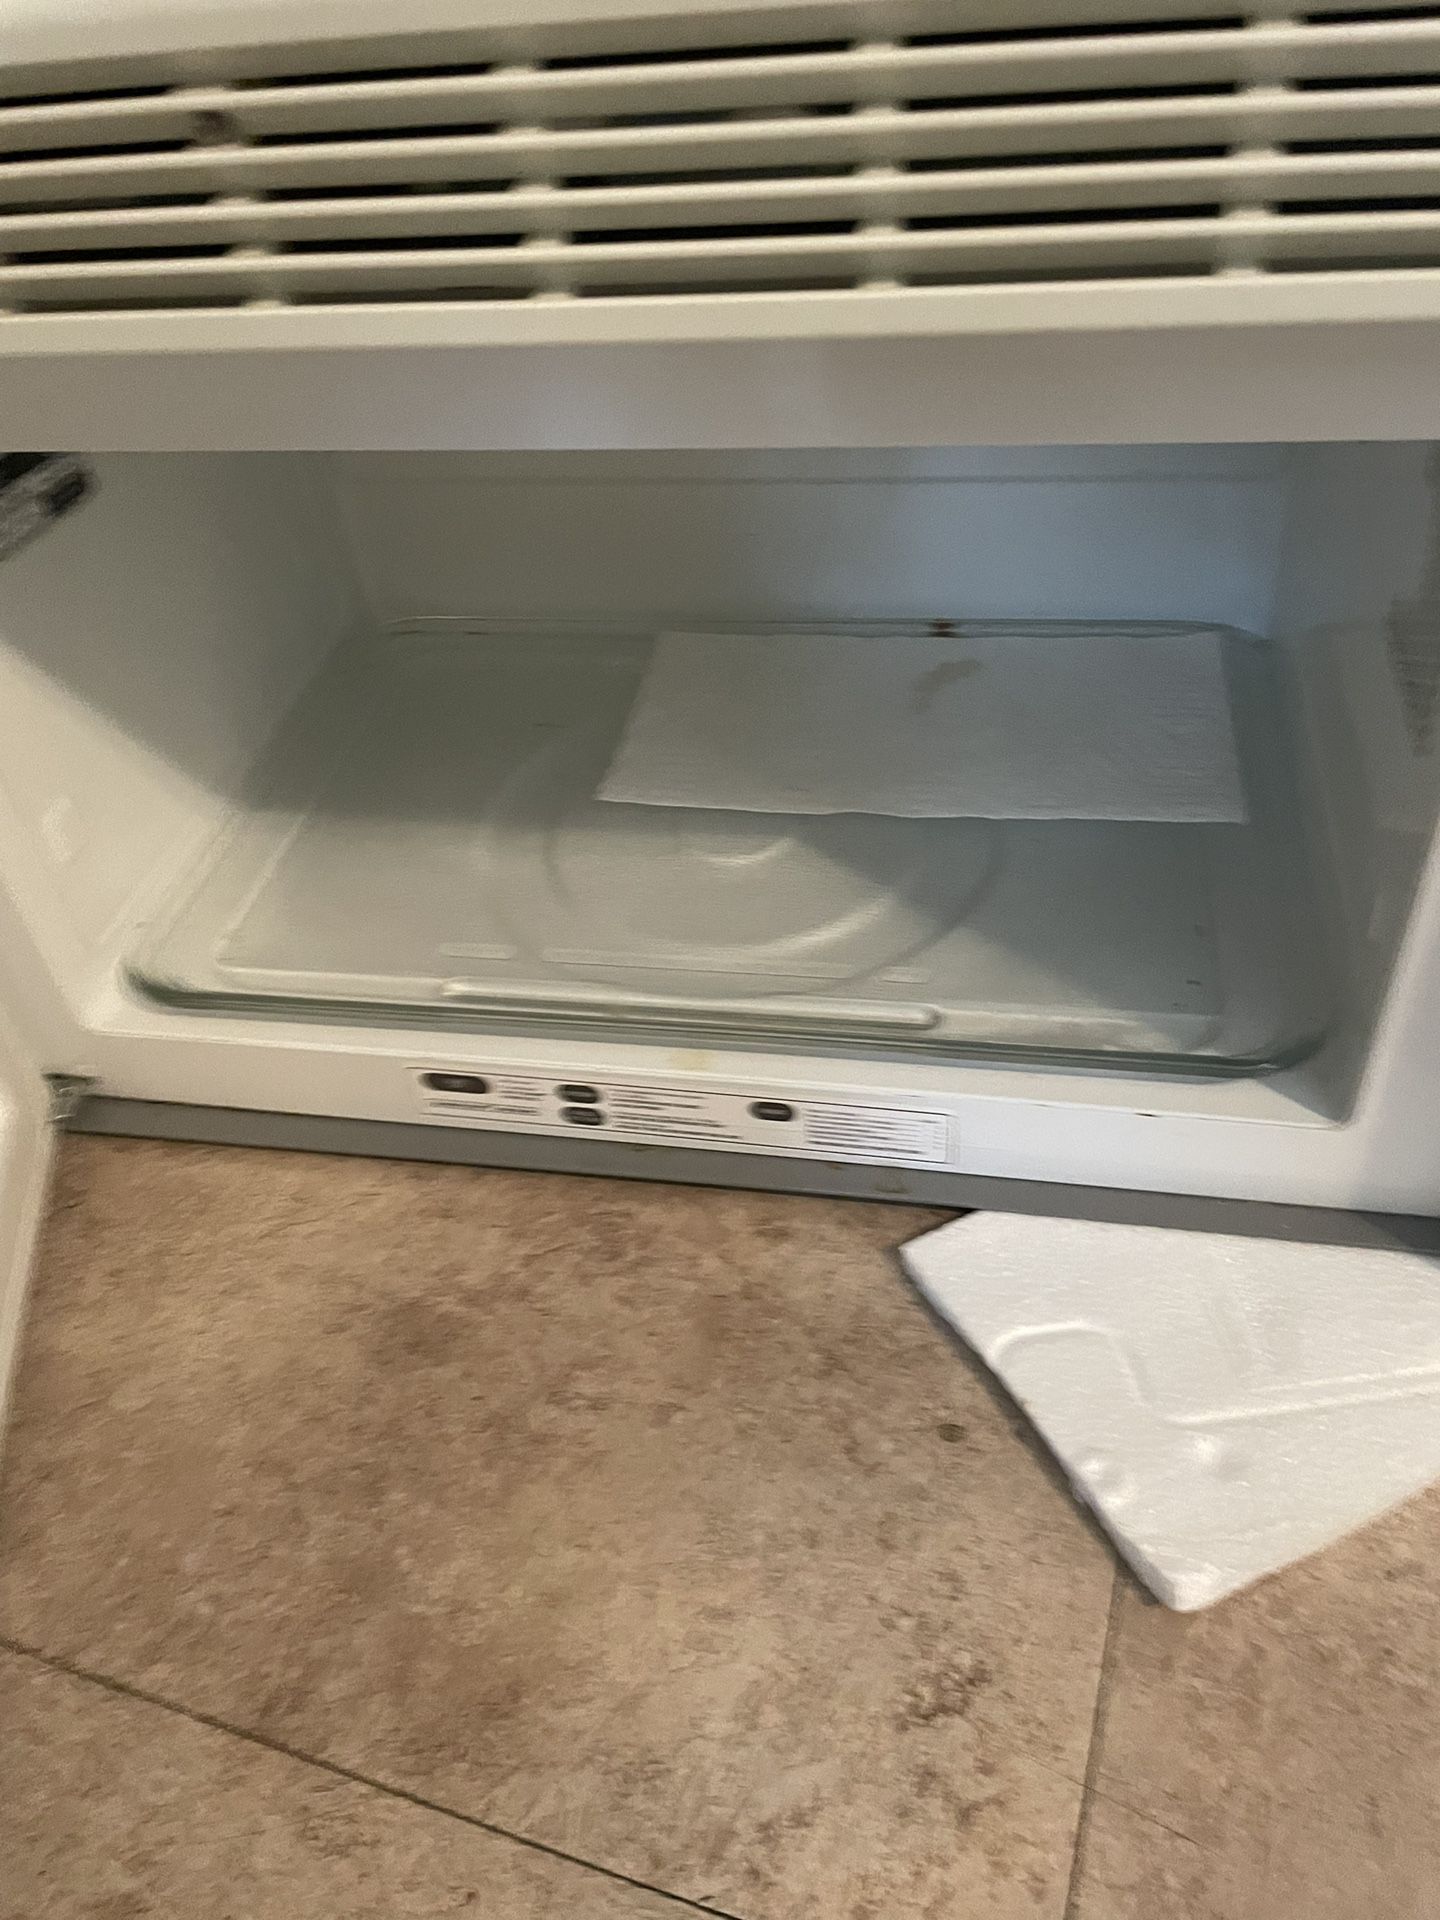 Microwave Under Cabinet 